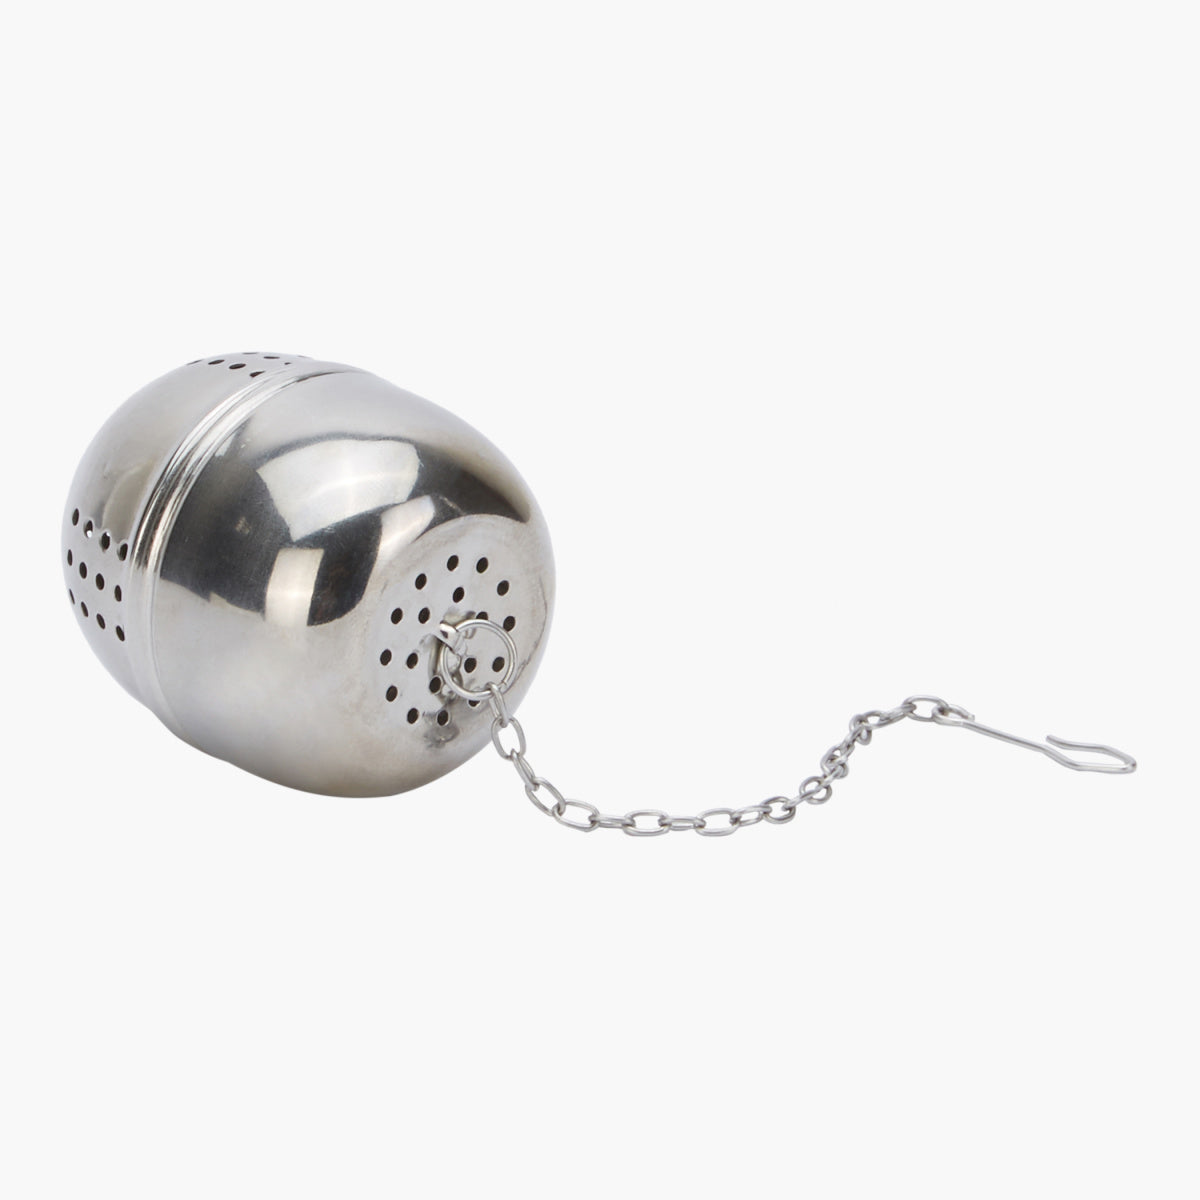 Crystal Tea Ball with Metallic Chain